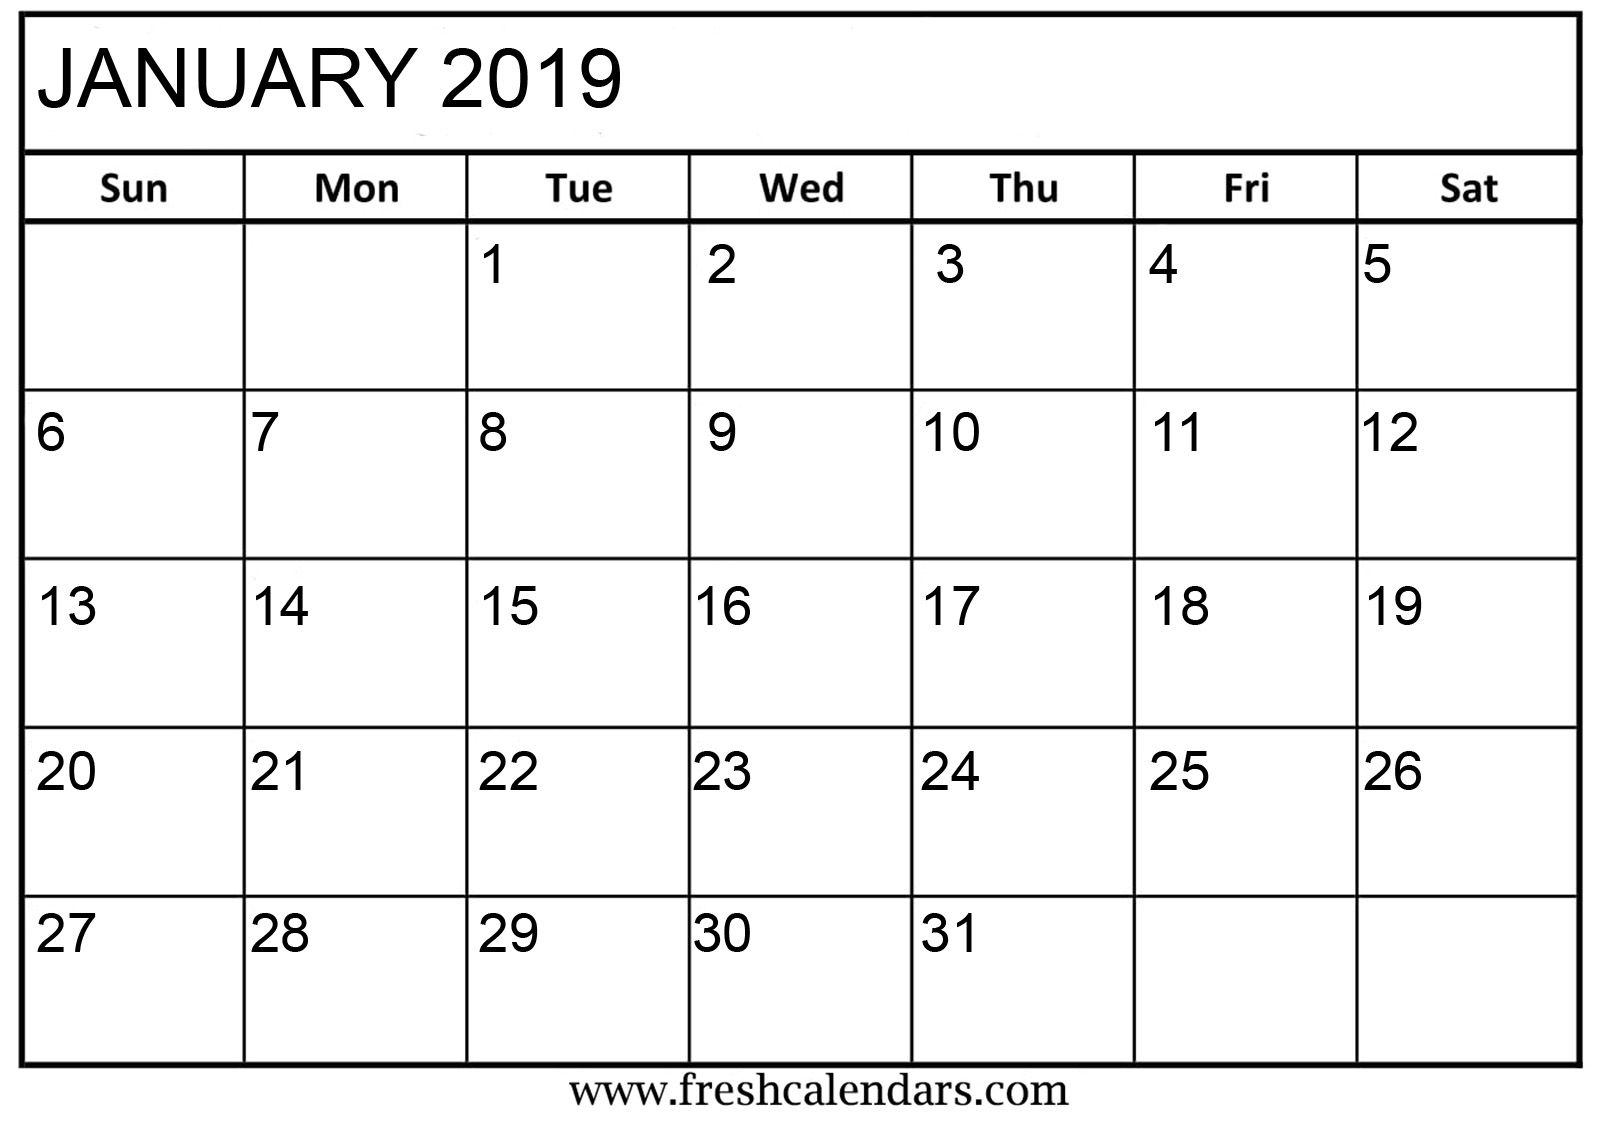 free-printable-2019-calendar-freshcalendars